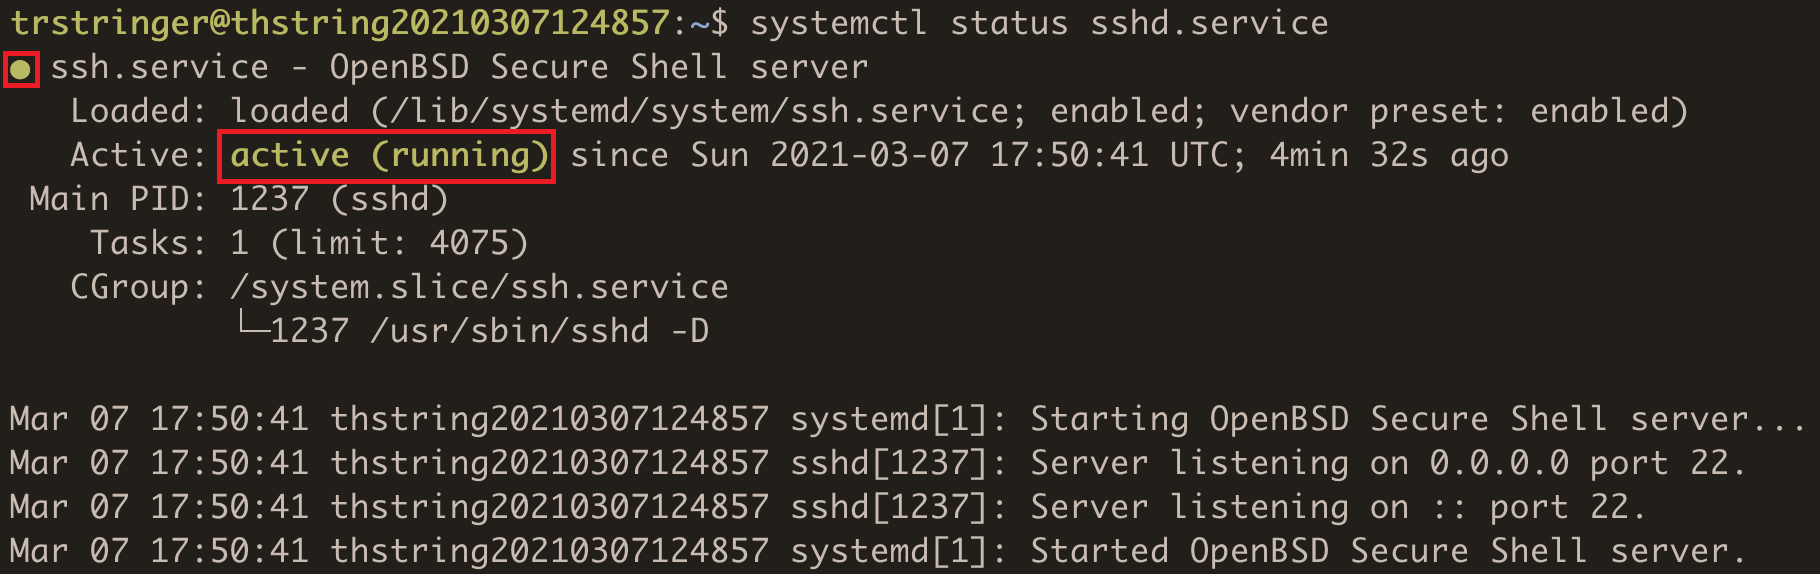 ssh.service status active